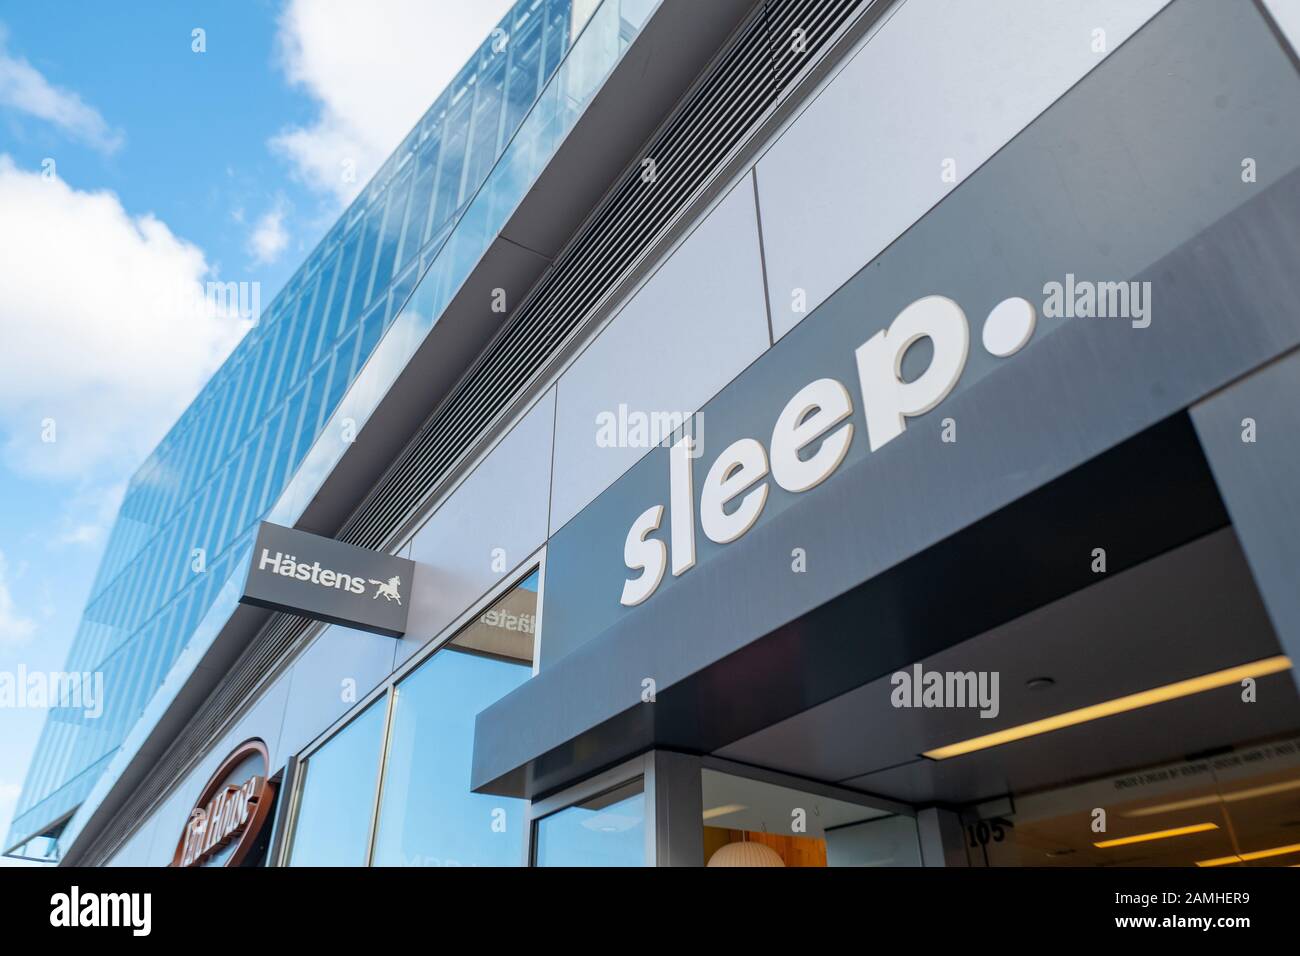 Logo and text reading Sleep on facade of Hastens European mattress